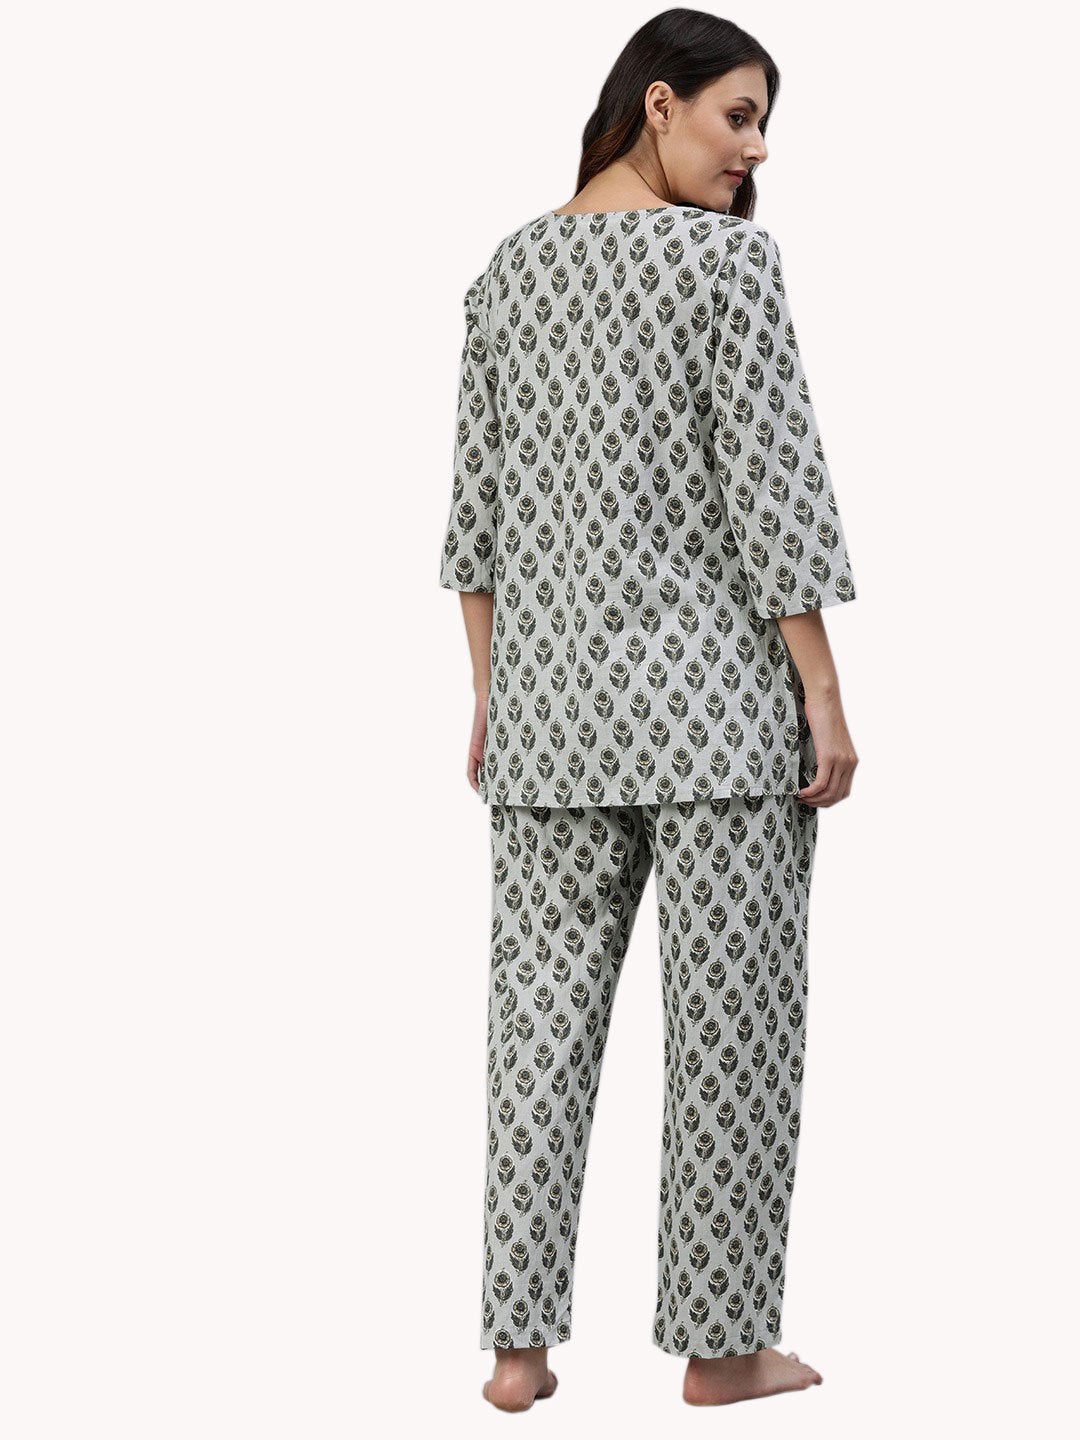 Women's Grey Color Cotton Loungewear/Nightwear - Noz2Toz